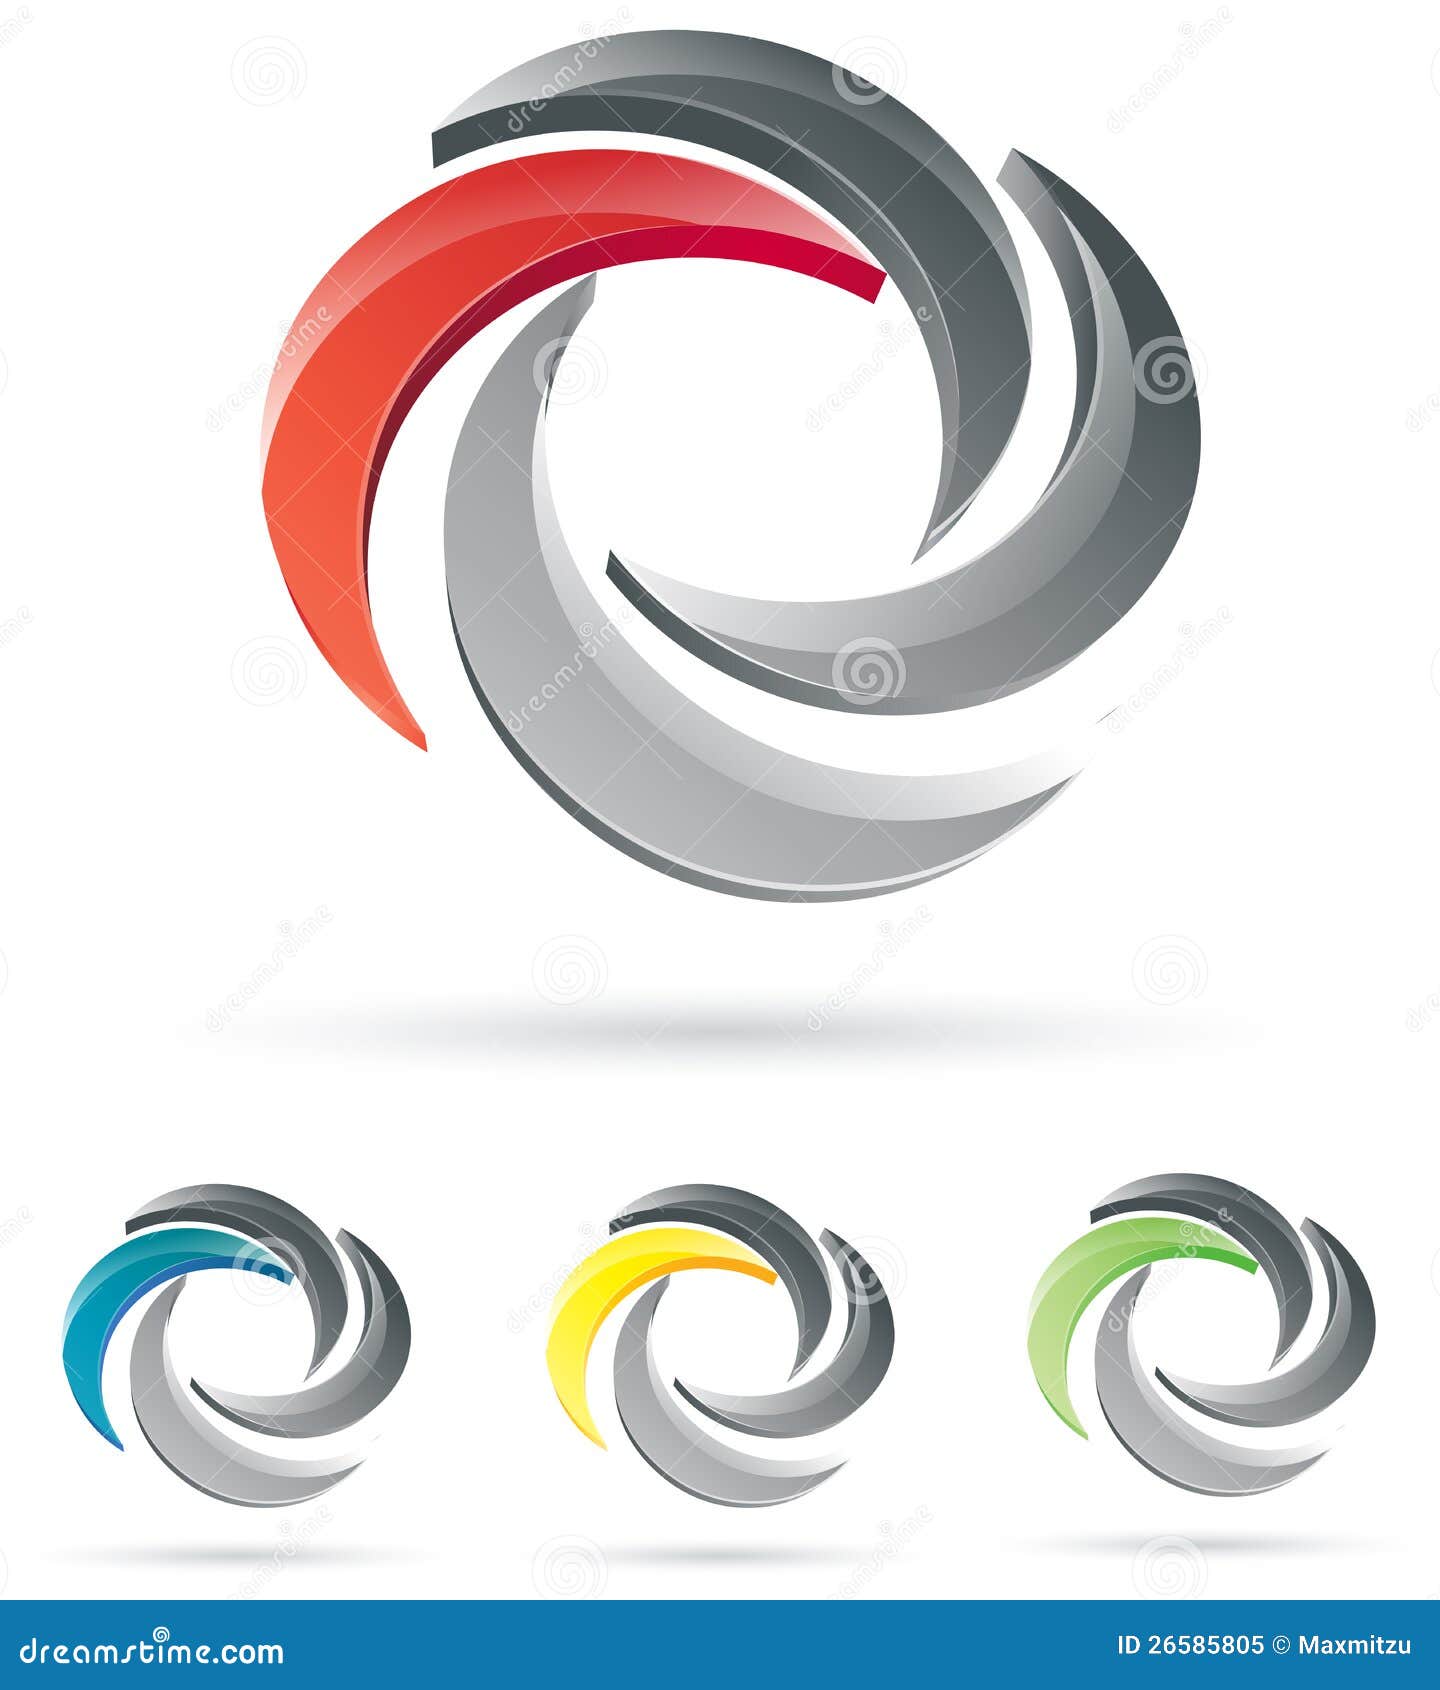 Business Logo Design Royalty Free Stock Photo  Image: 26585805